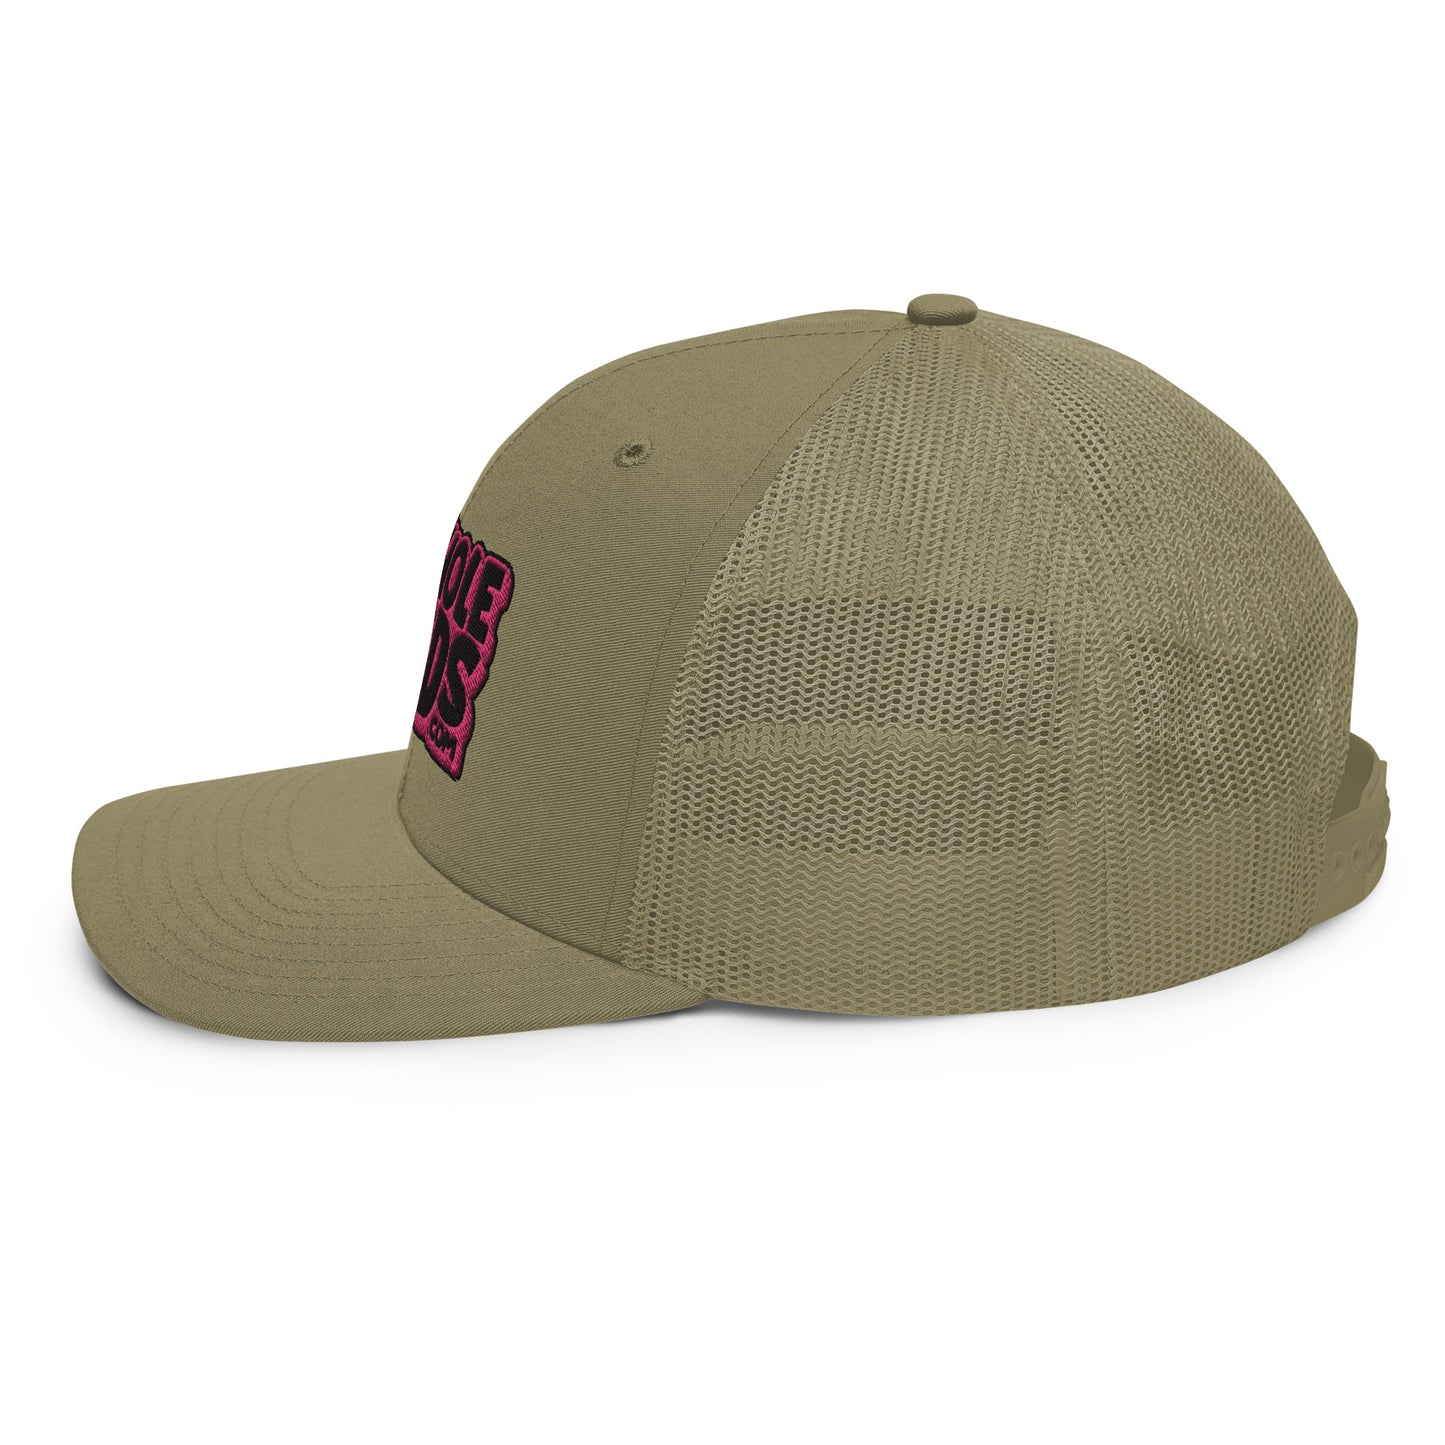 black/pink nerds logo Richardson 112 snapback Trucker hat